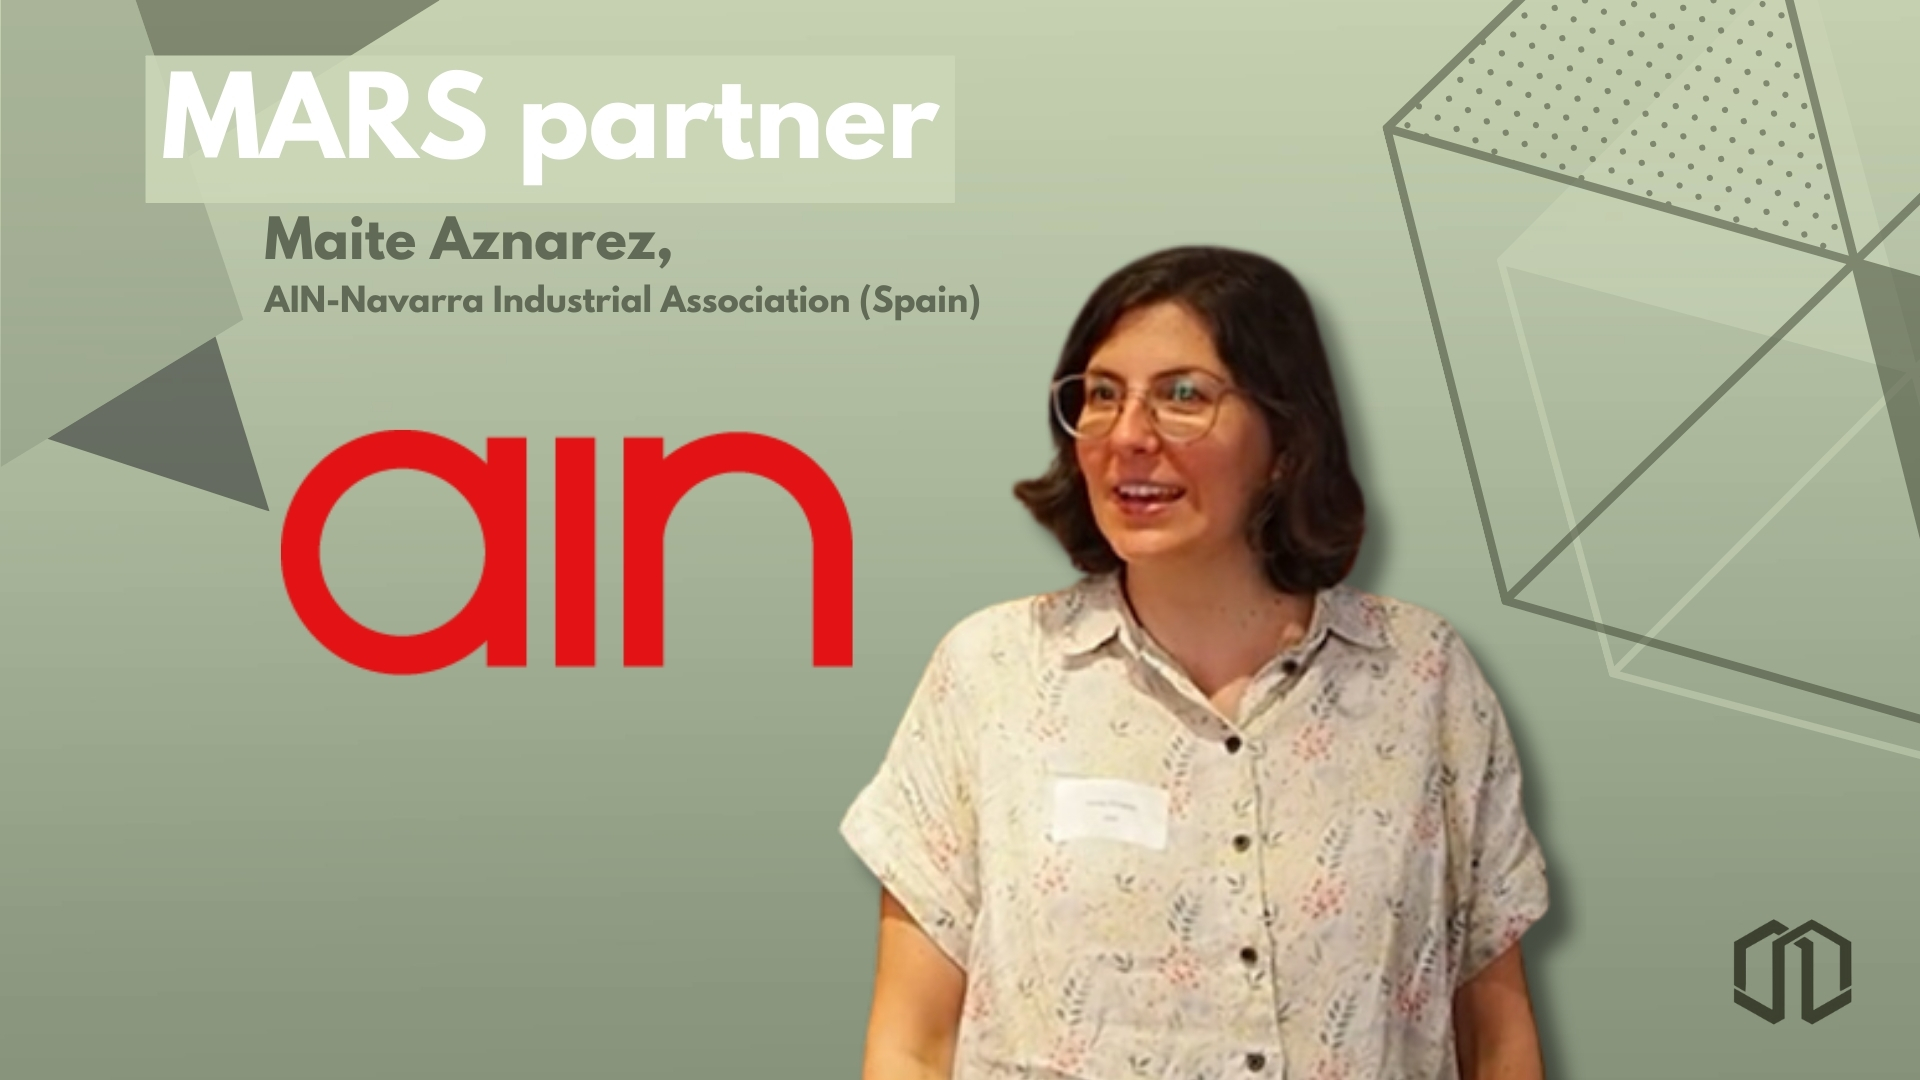 Meet our partner: Video interview with Maite Aznarez (AIN)